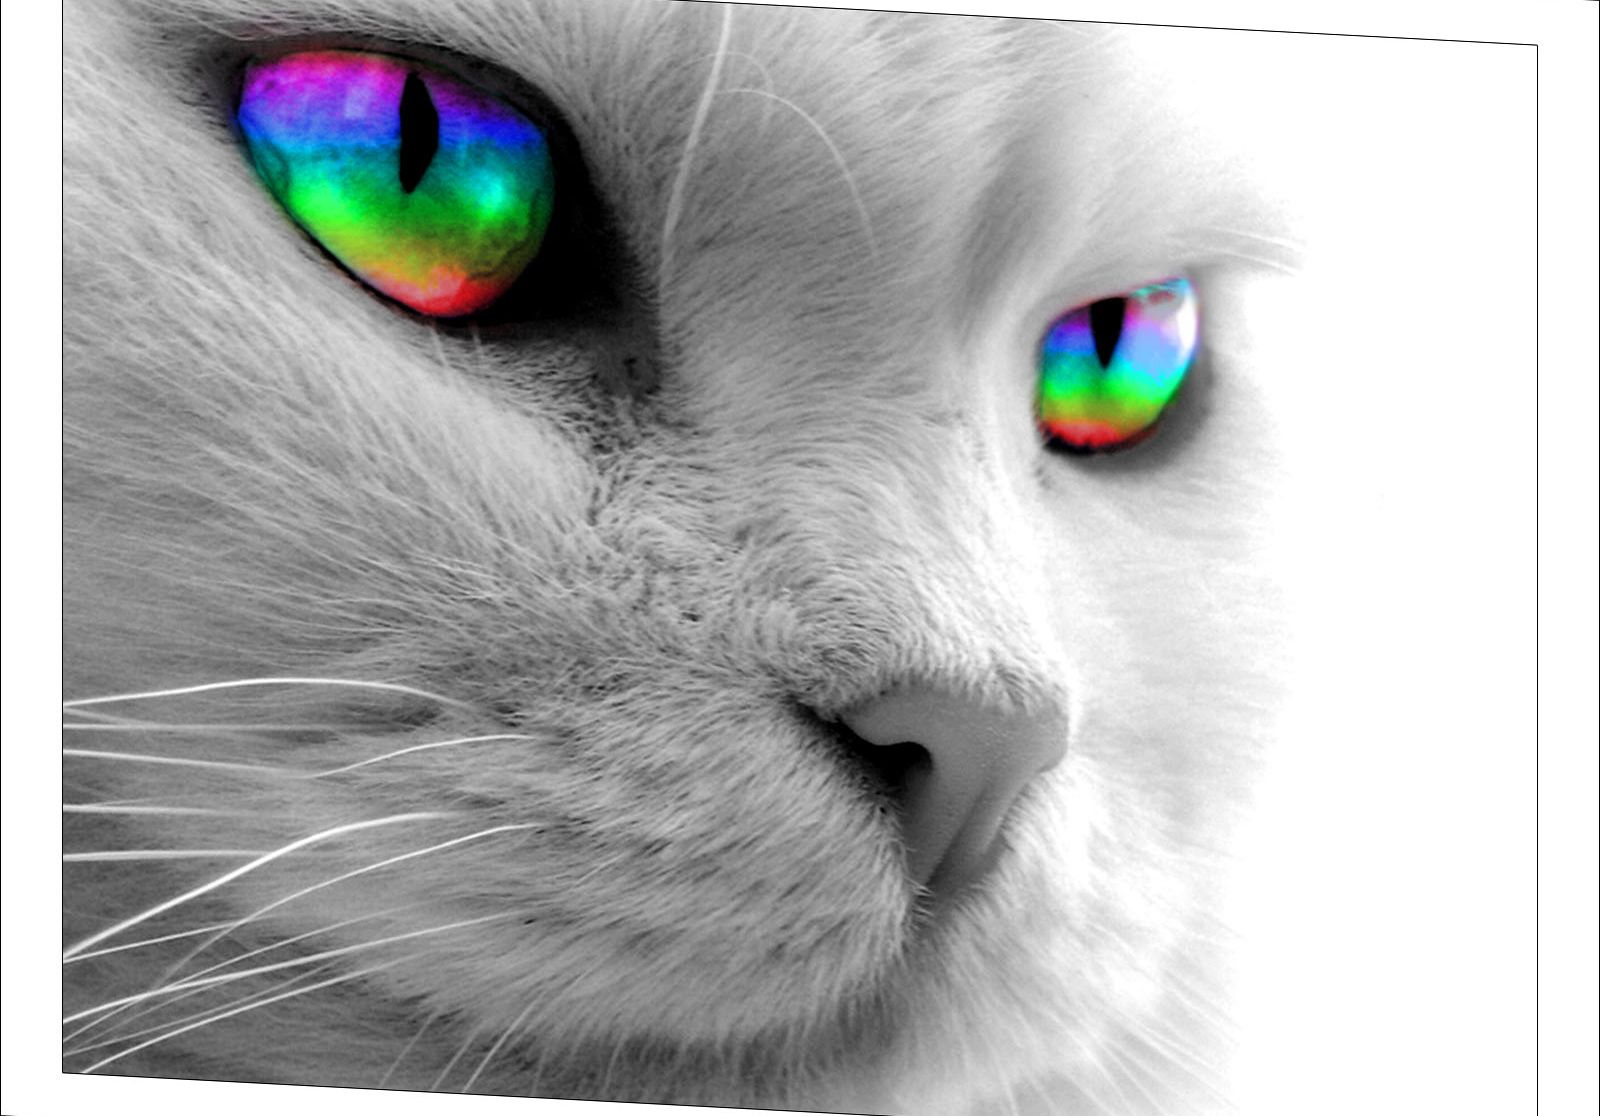 Rainbow_cat2